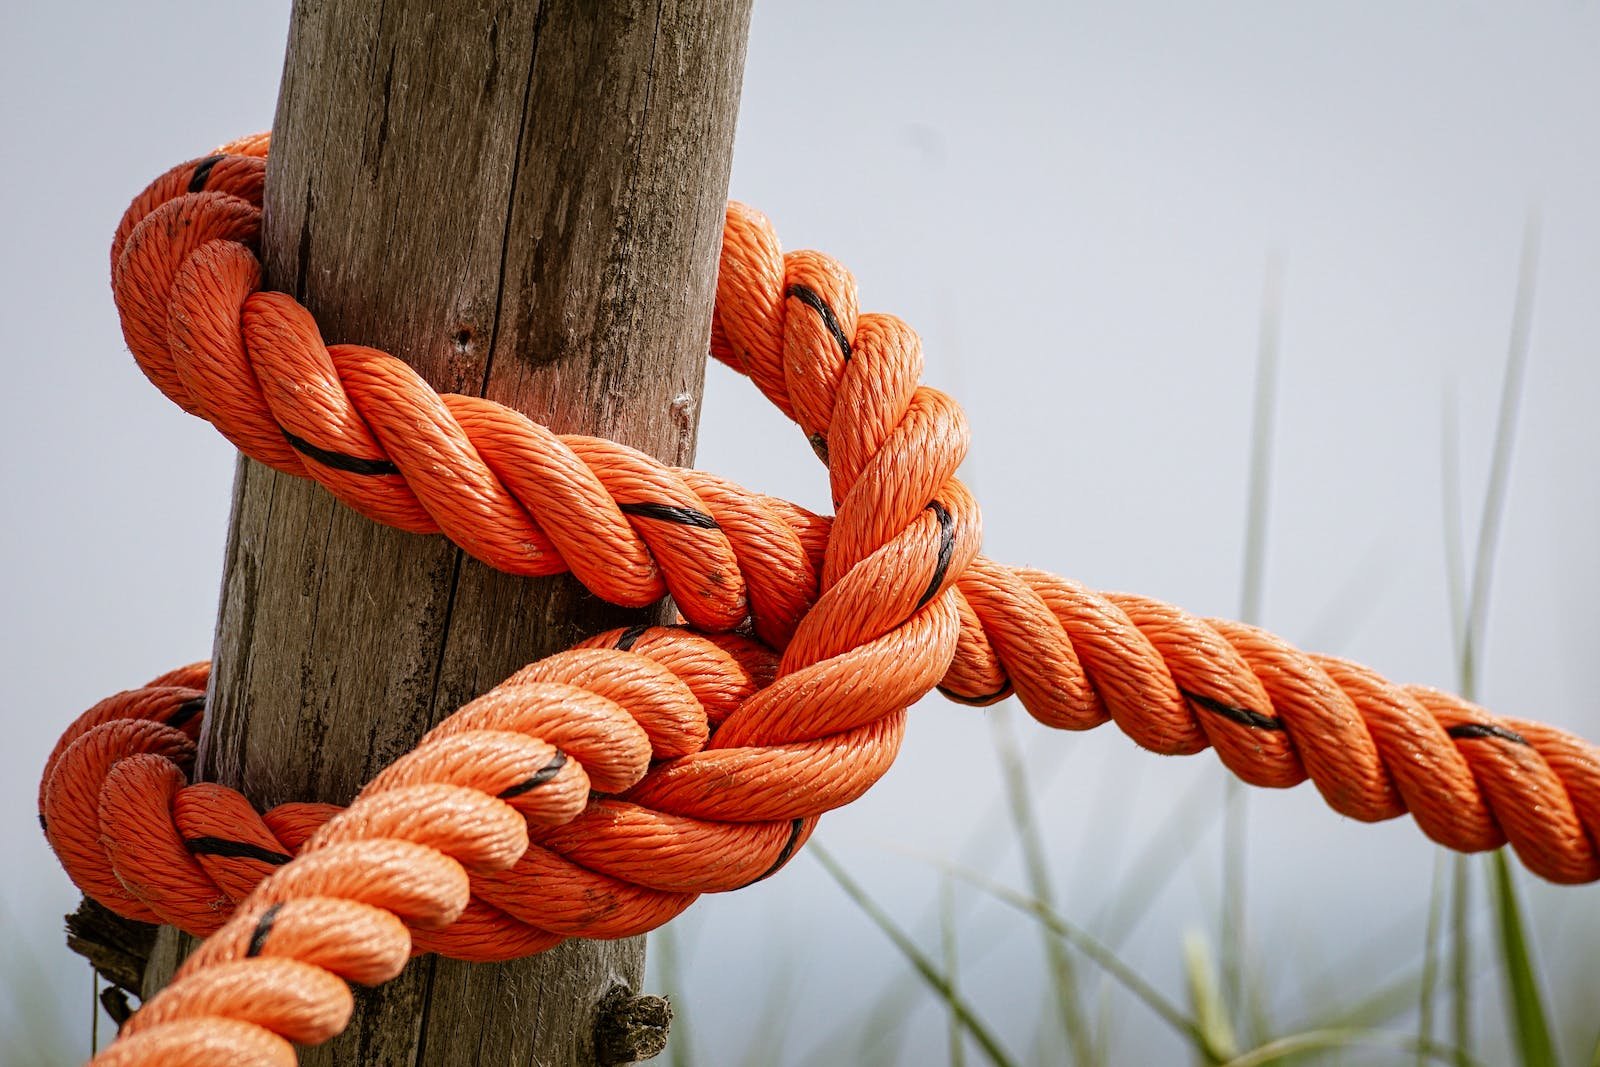 knot tied around wooden pole